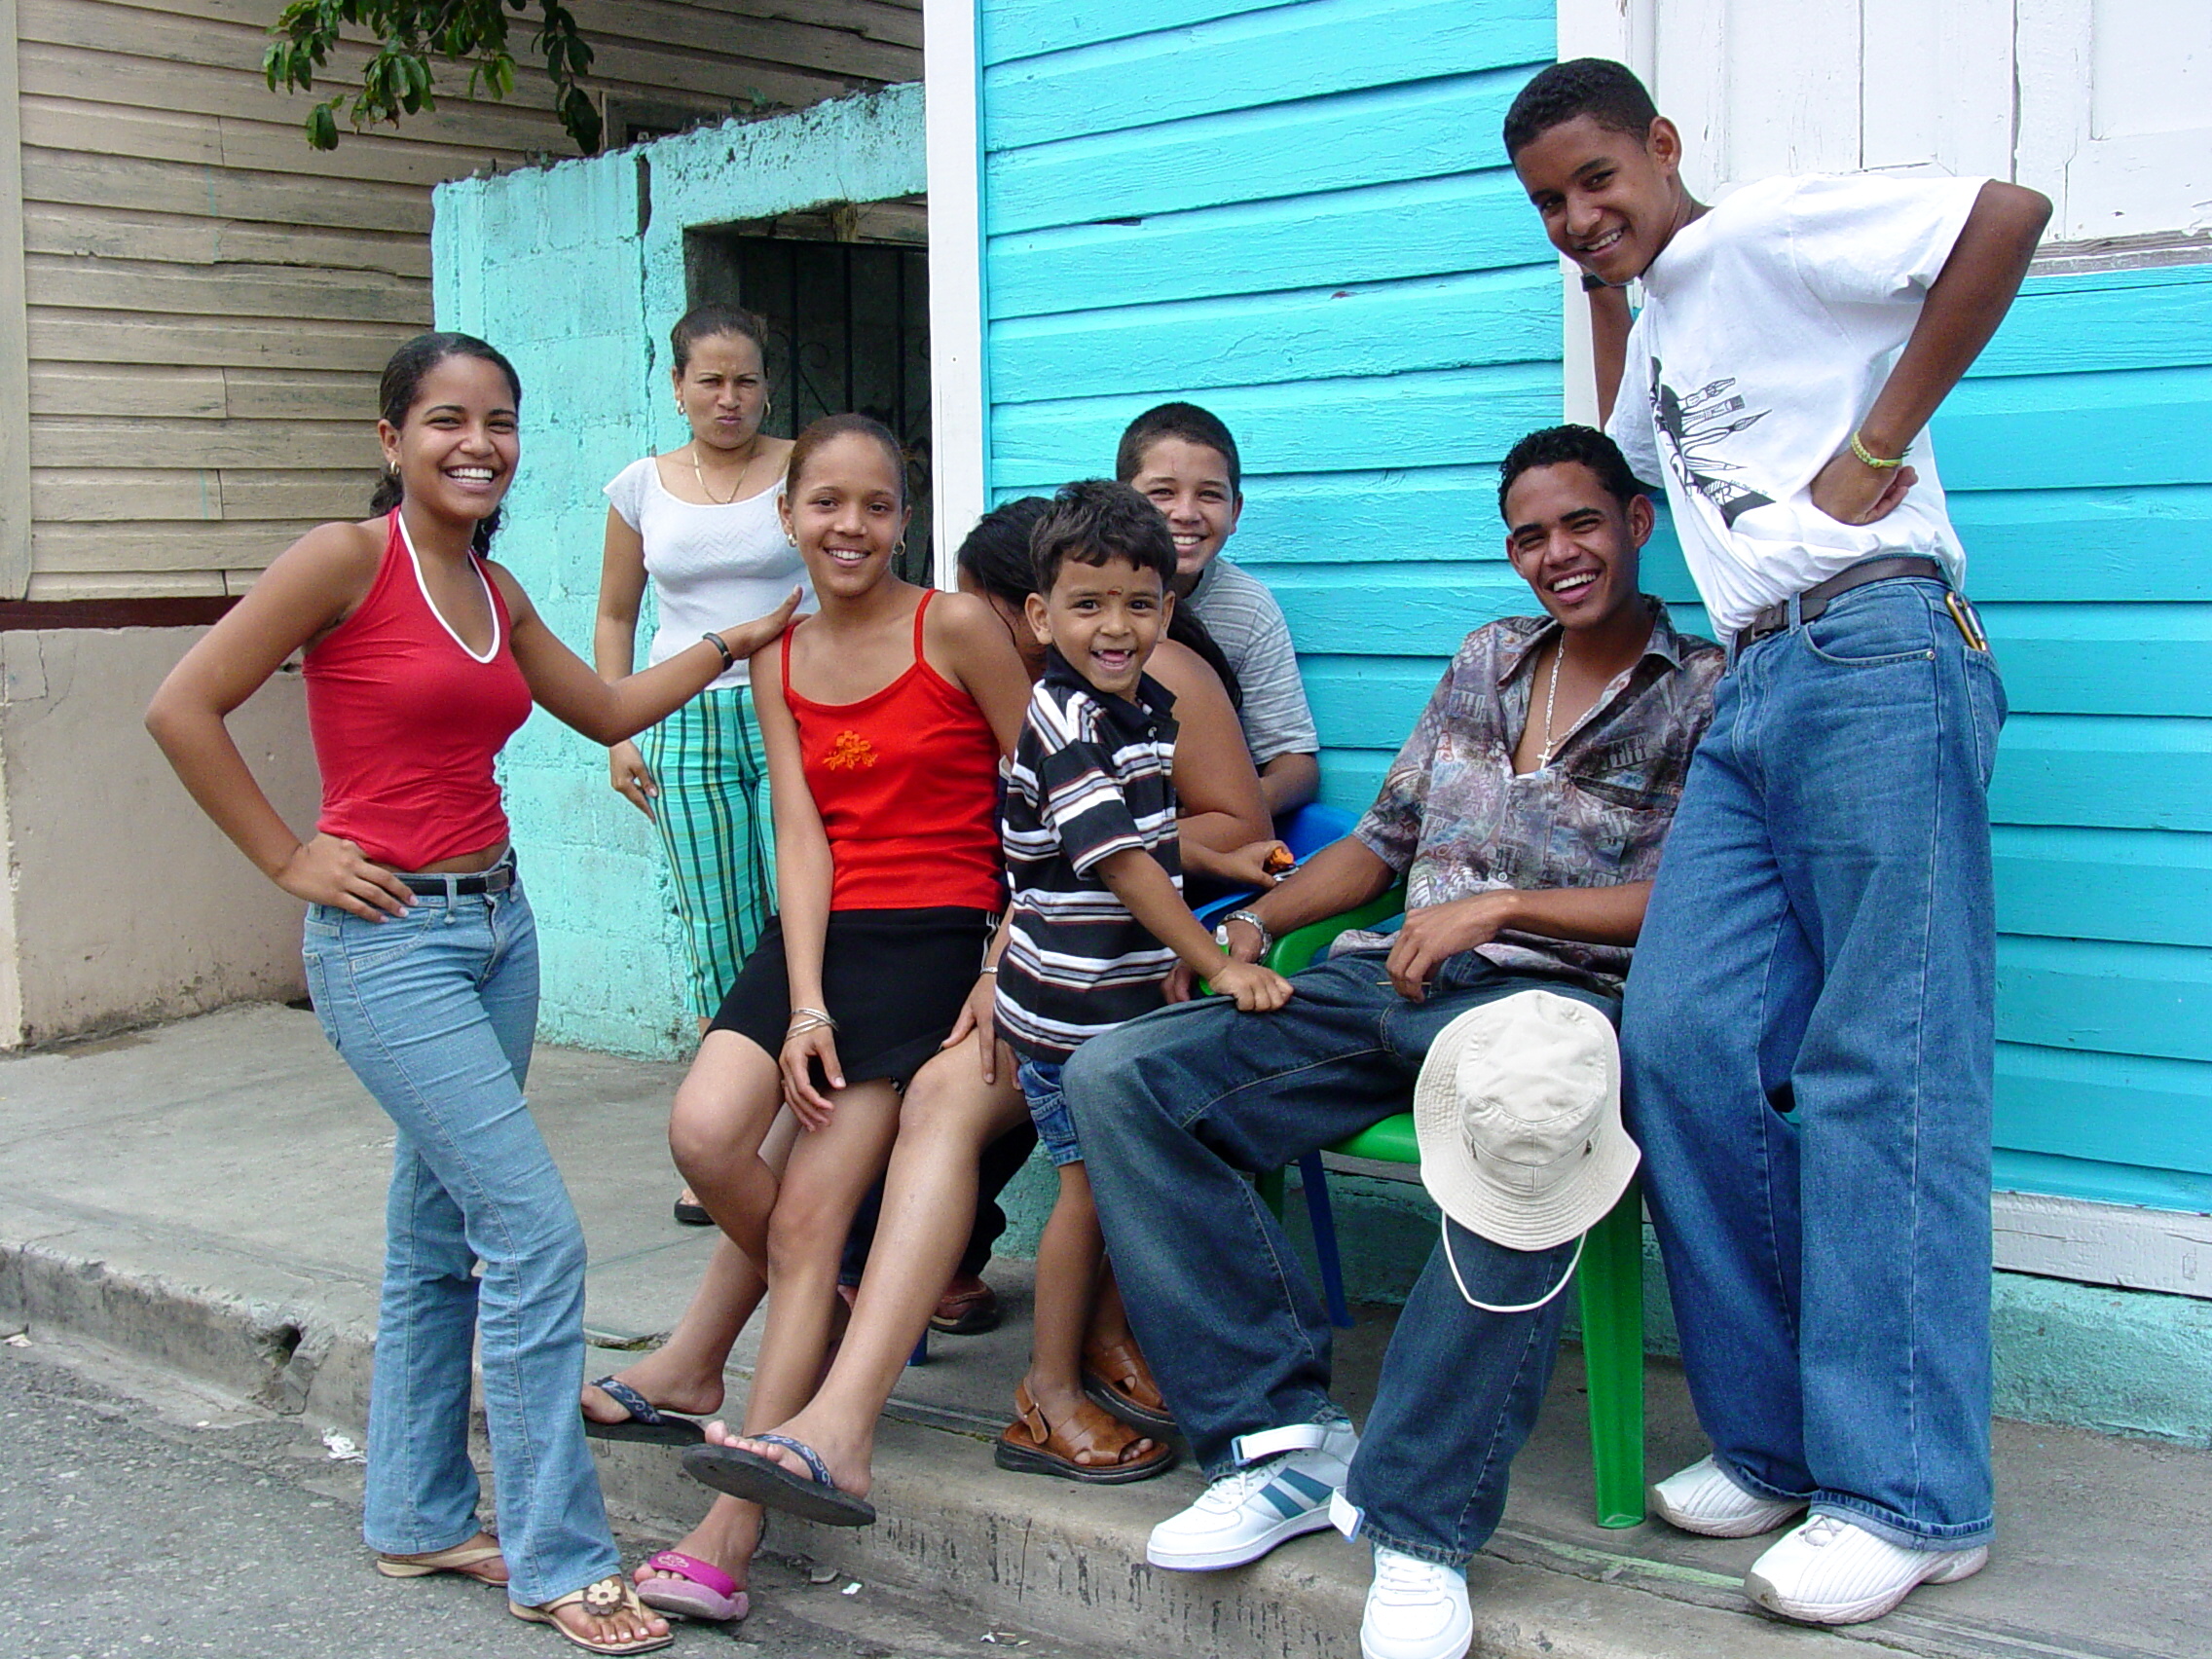 Friendly Folk on the Street - San Jose de Ocoa - Dominican Republic